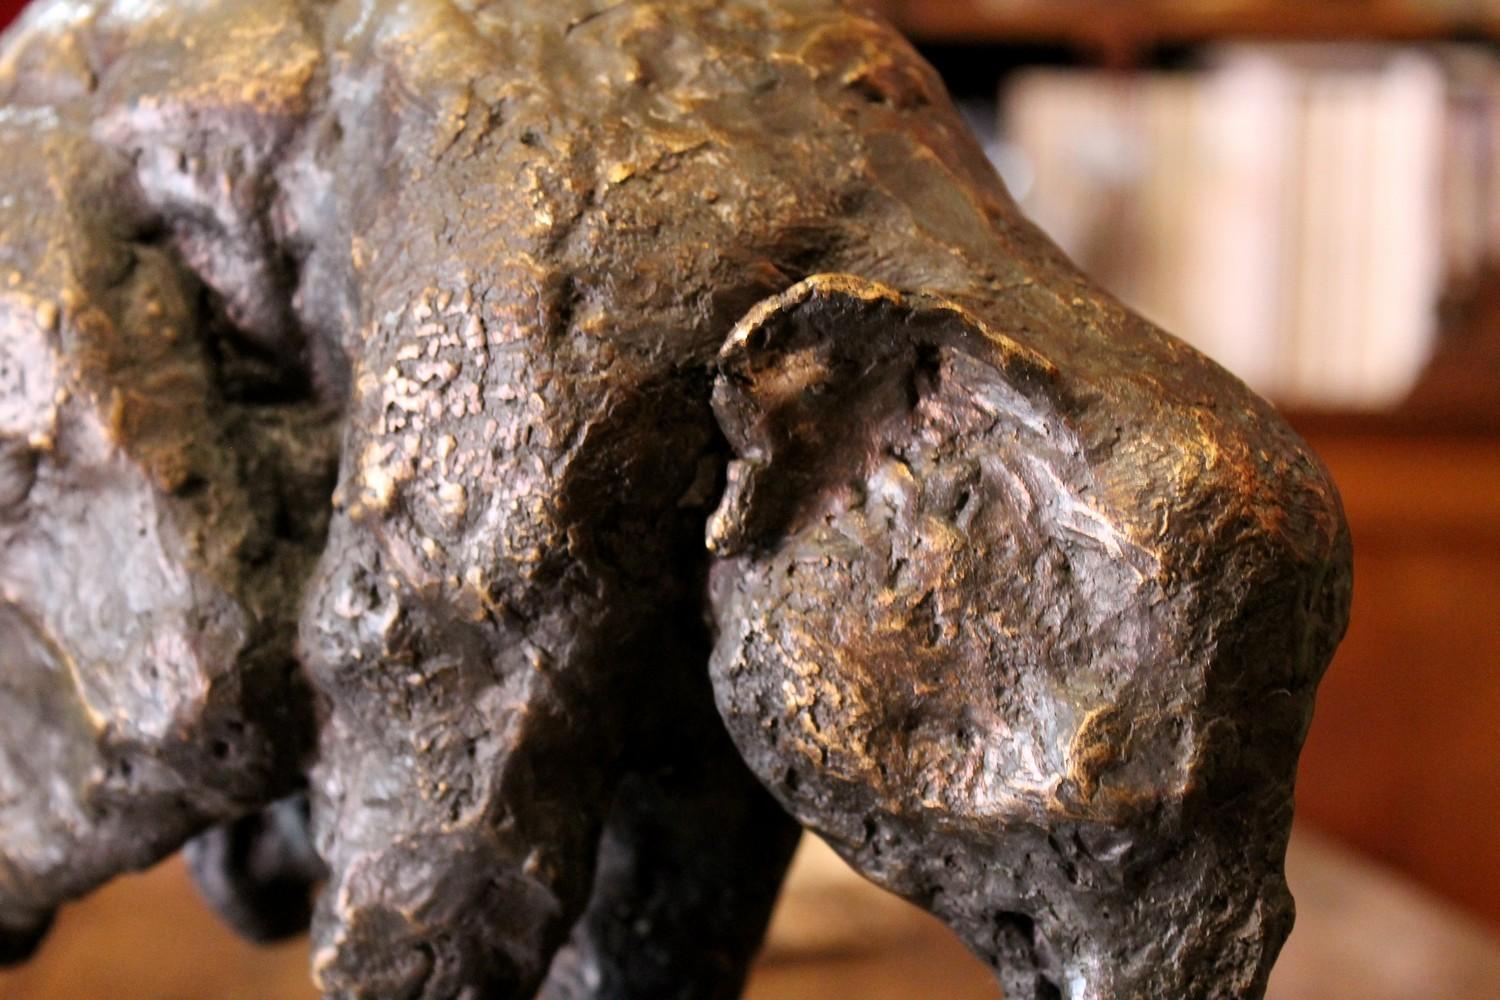 Elephant on Iron Pedestal, Lost Wax Casting Parcel-Gilt Patina Bronze Sculpture 5